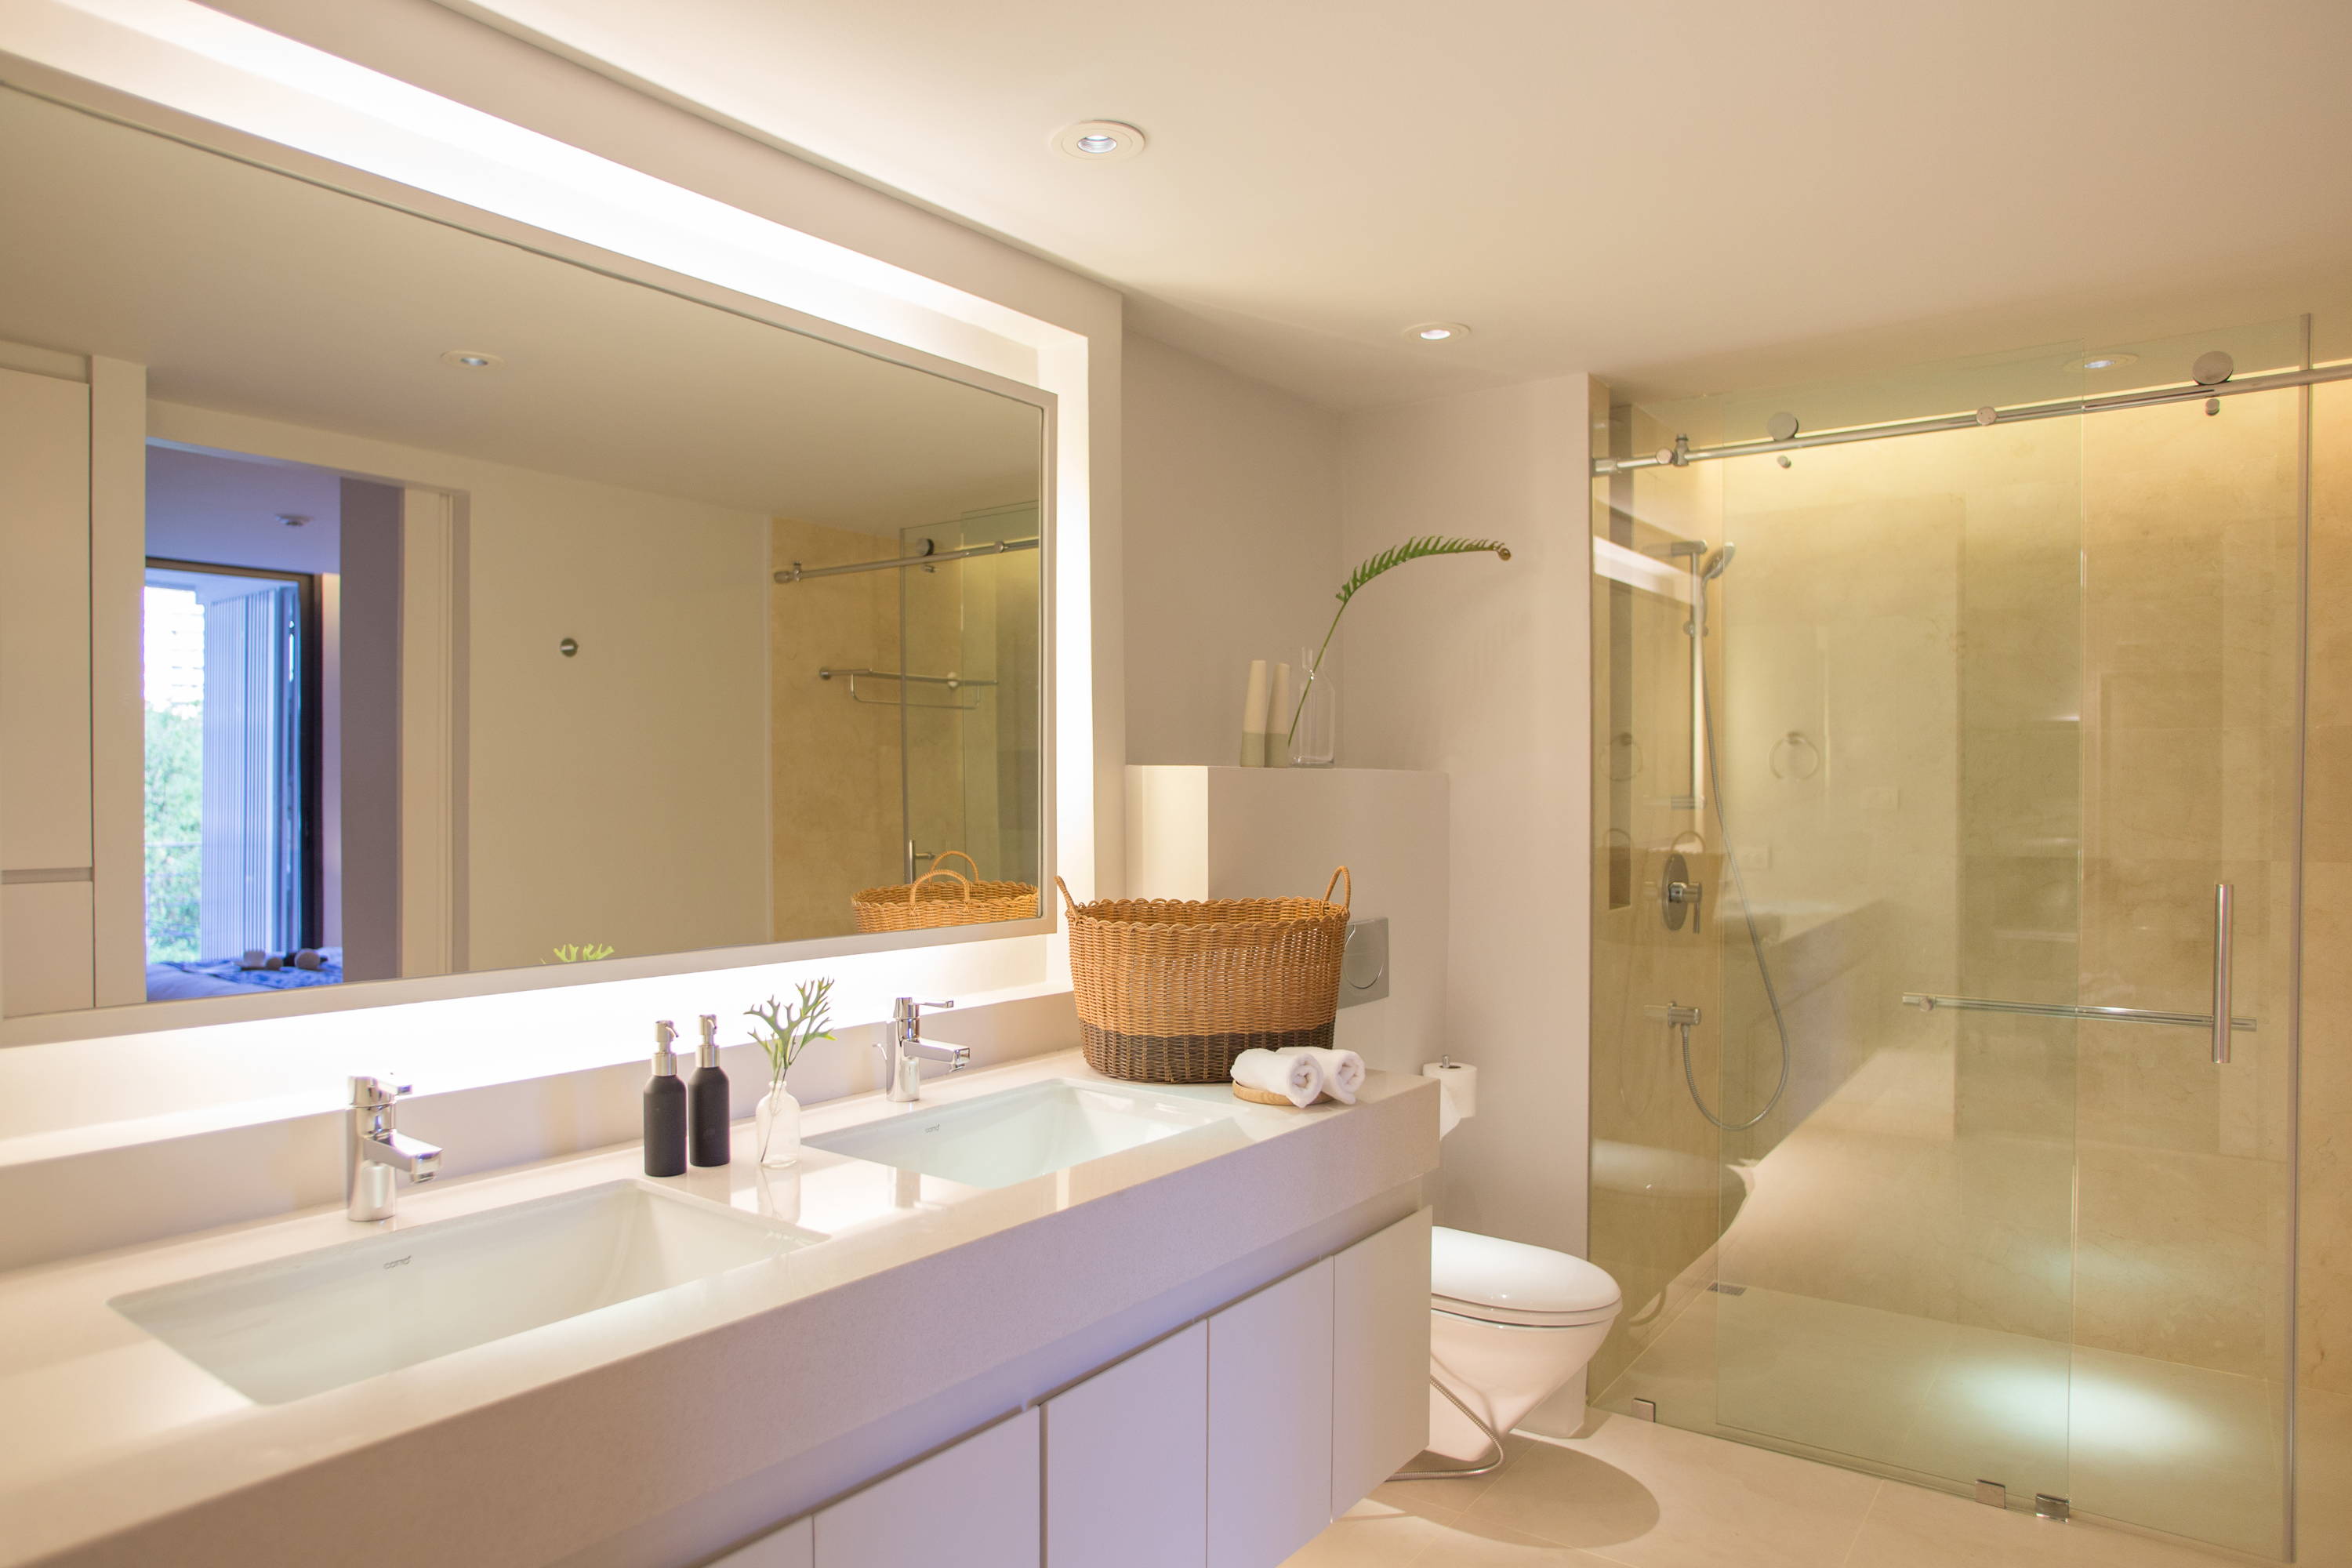 Frameless shower doors and glass vanity mirrors